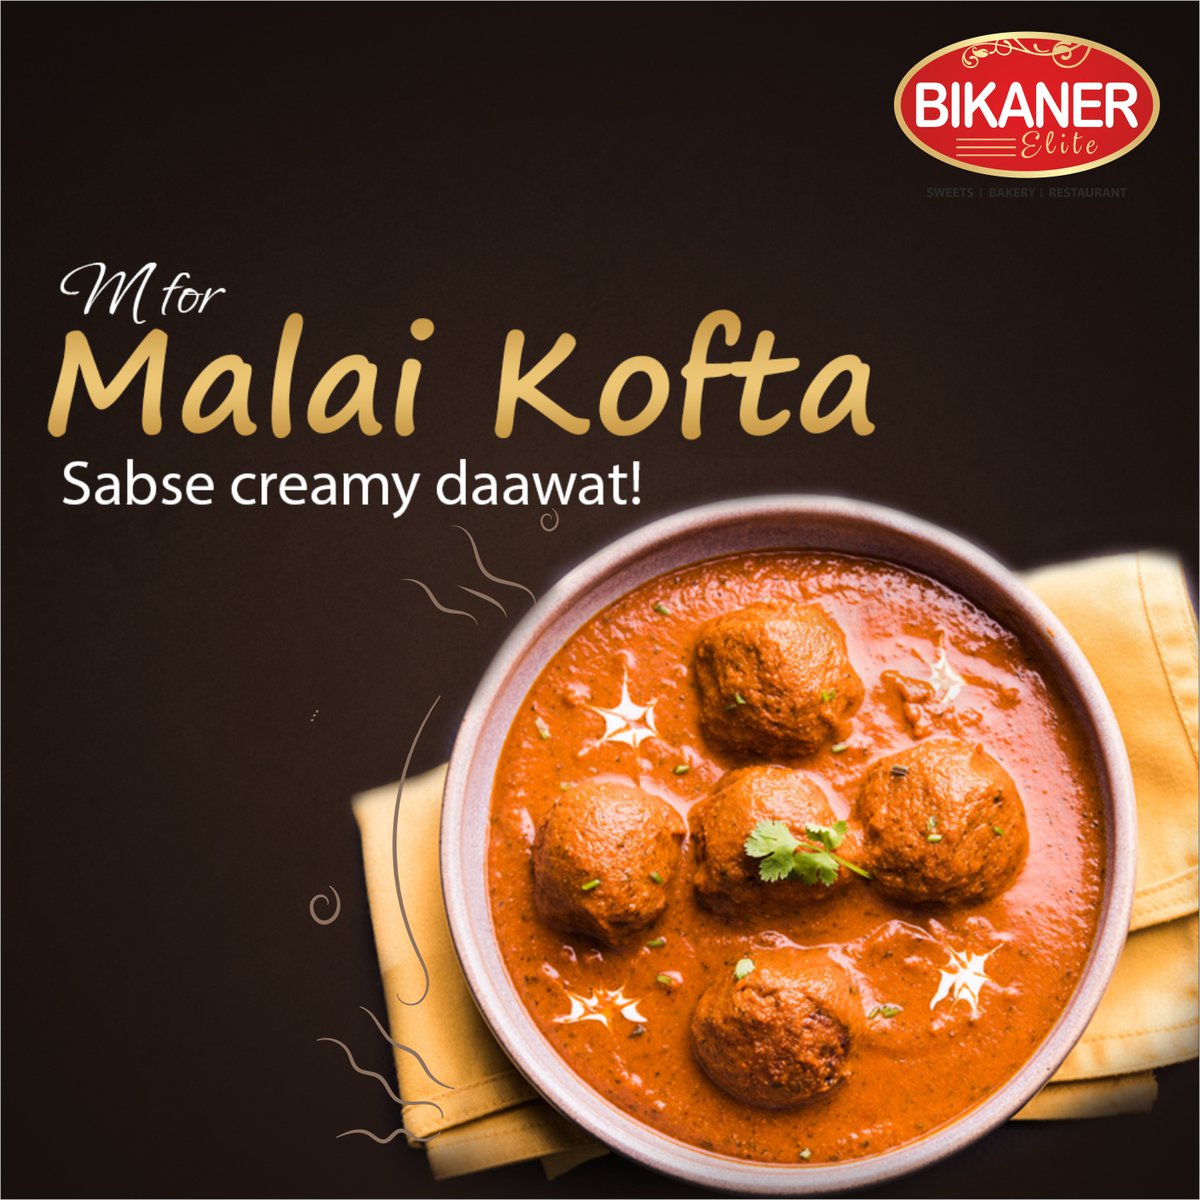 ‘Malai Kofta is average’ – SAID NO ONE! That creamy delight with a tint of Indian spices is nothing
short of heaven!
.
.
.
#MalaiKofta #BikanerElite #AmazingIndianFood #FoodLove #WhatATaste #FavouriteFood #Patna  #restaurant #PatnaDiaries #DeliciousFood #CreamyDelight